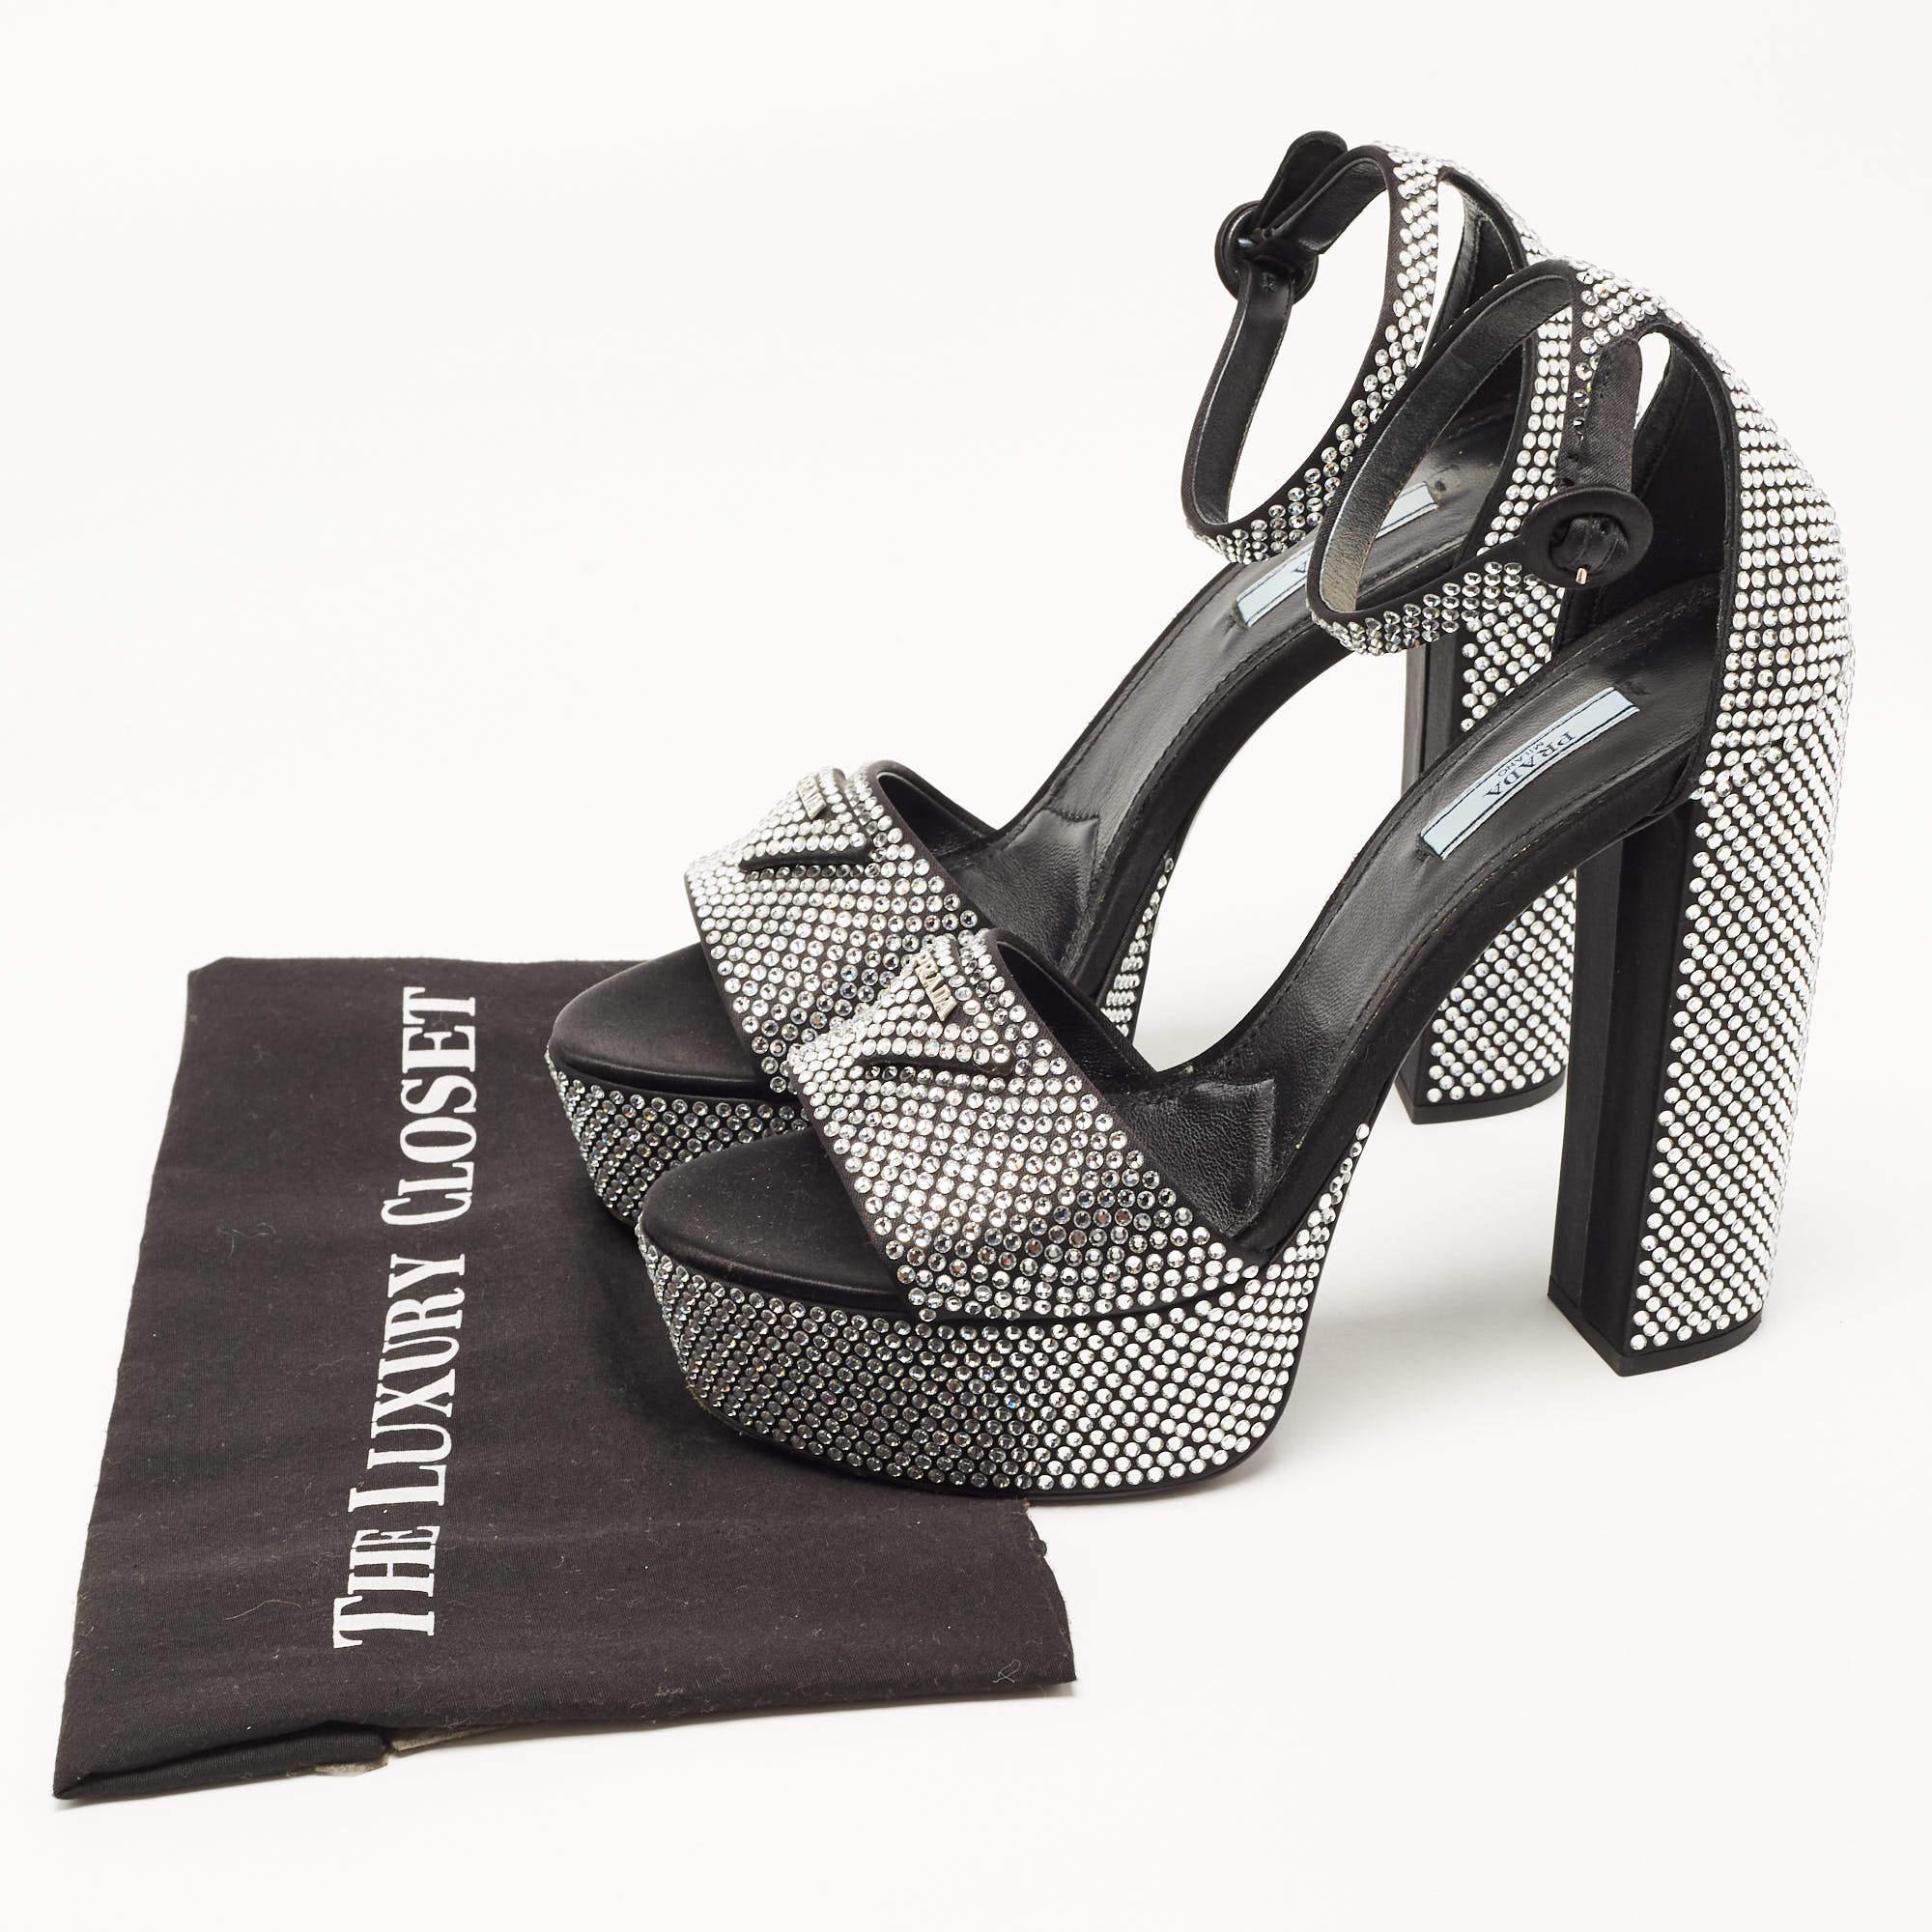 Prada Black/Silver Satin and Crystals Platform Sandals Size 39.5 6